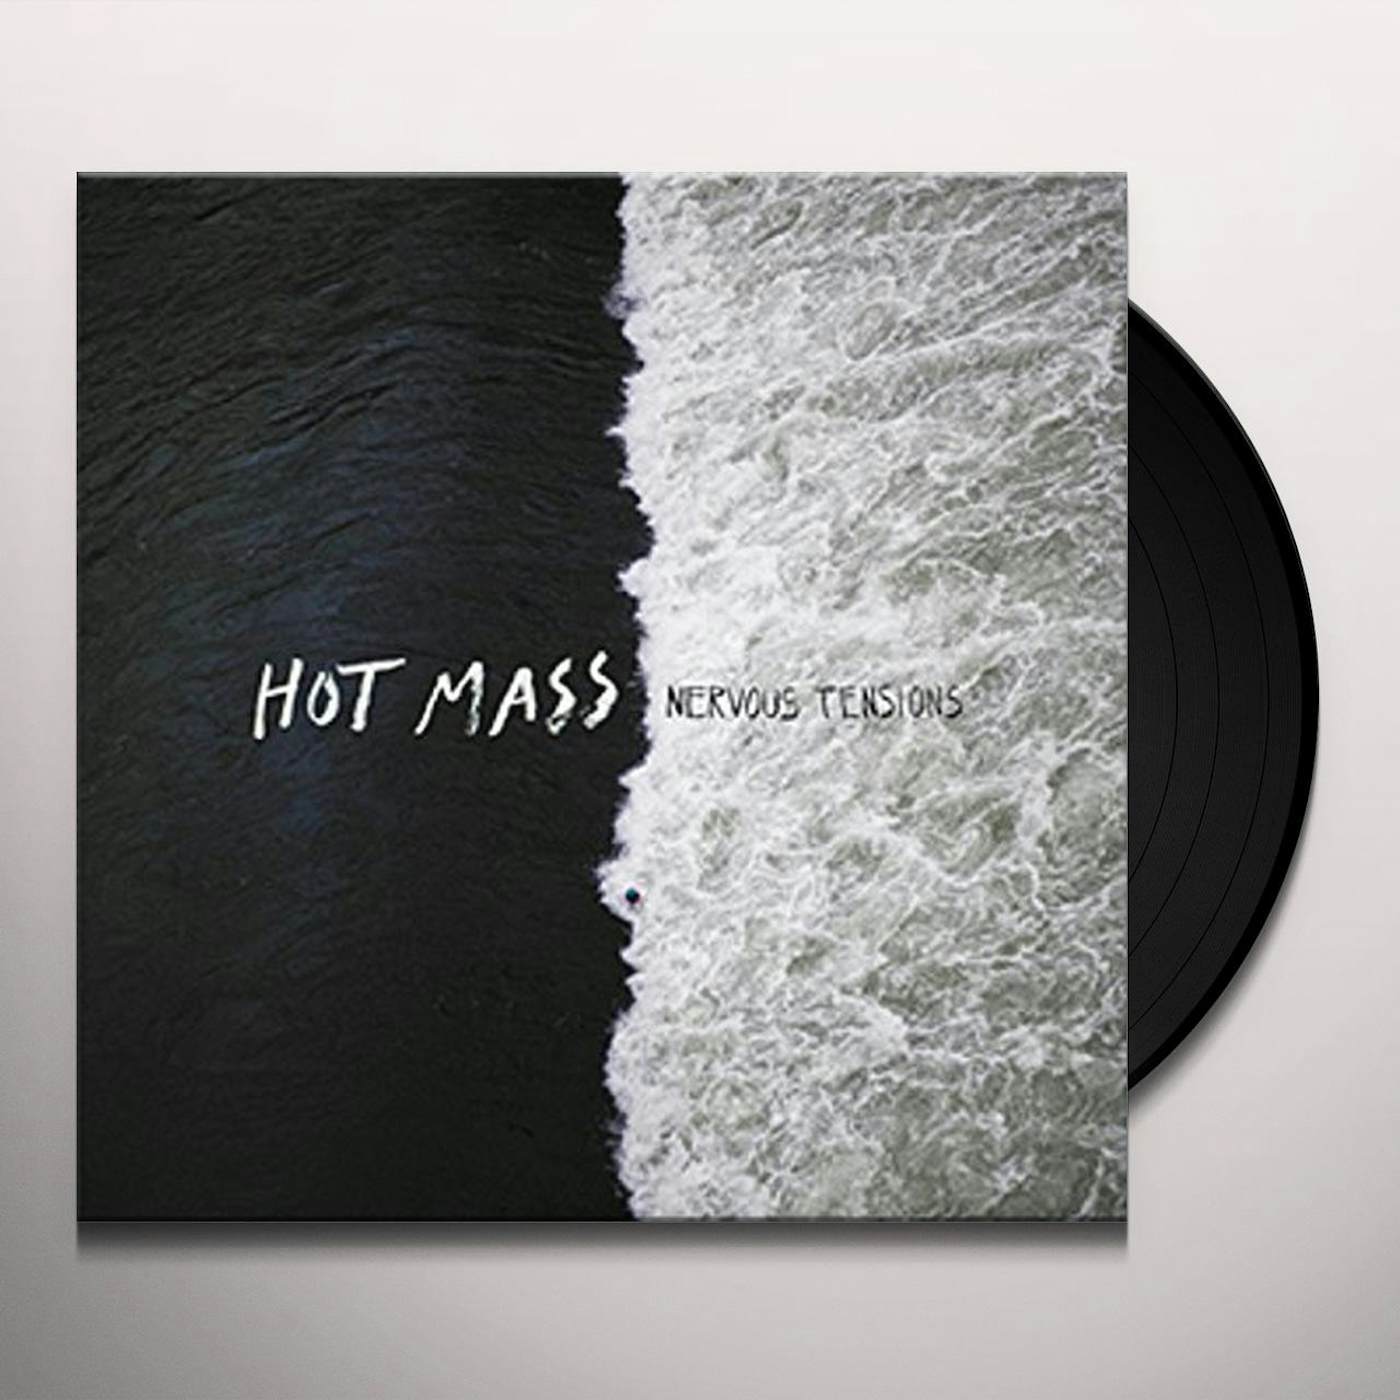 Hot Mass NERVOUS TENTIONS Vinyl Record